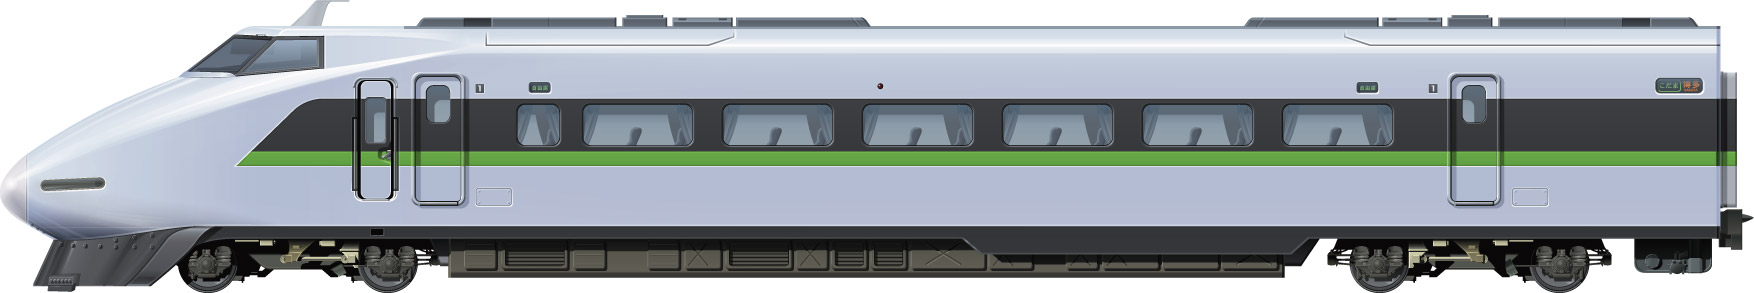 Jr Jnr 新幹線100系 サイドビューイラスト